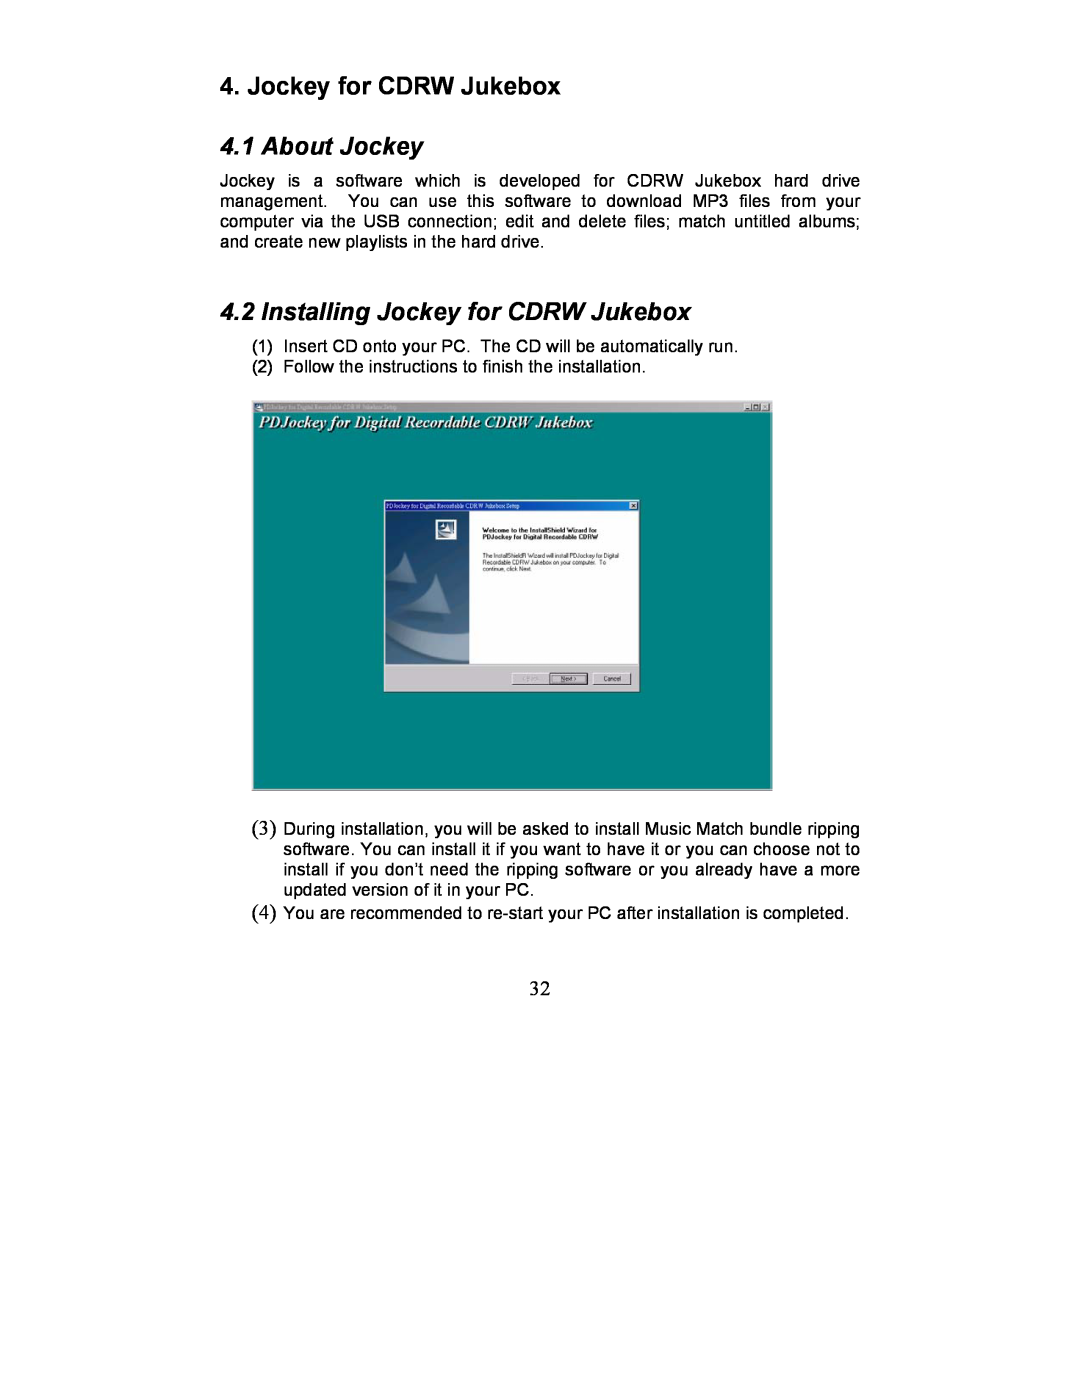 Perception Digital PD - 450 - 01 user manual About Jockey, 4.2Installing Jockey for CDRW Jukebox 